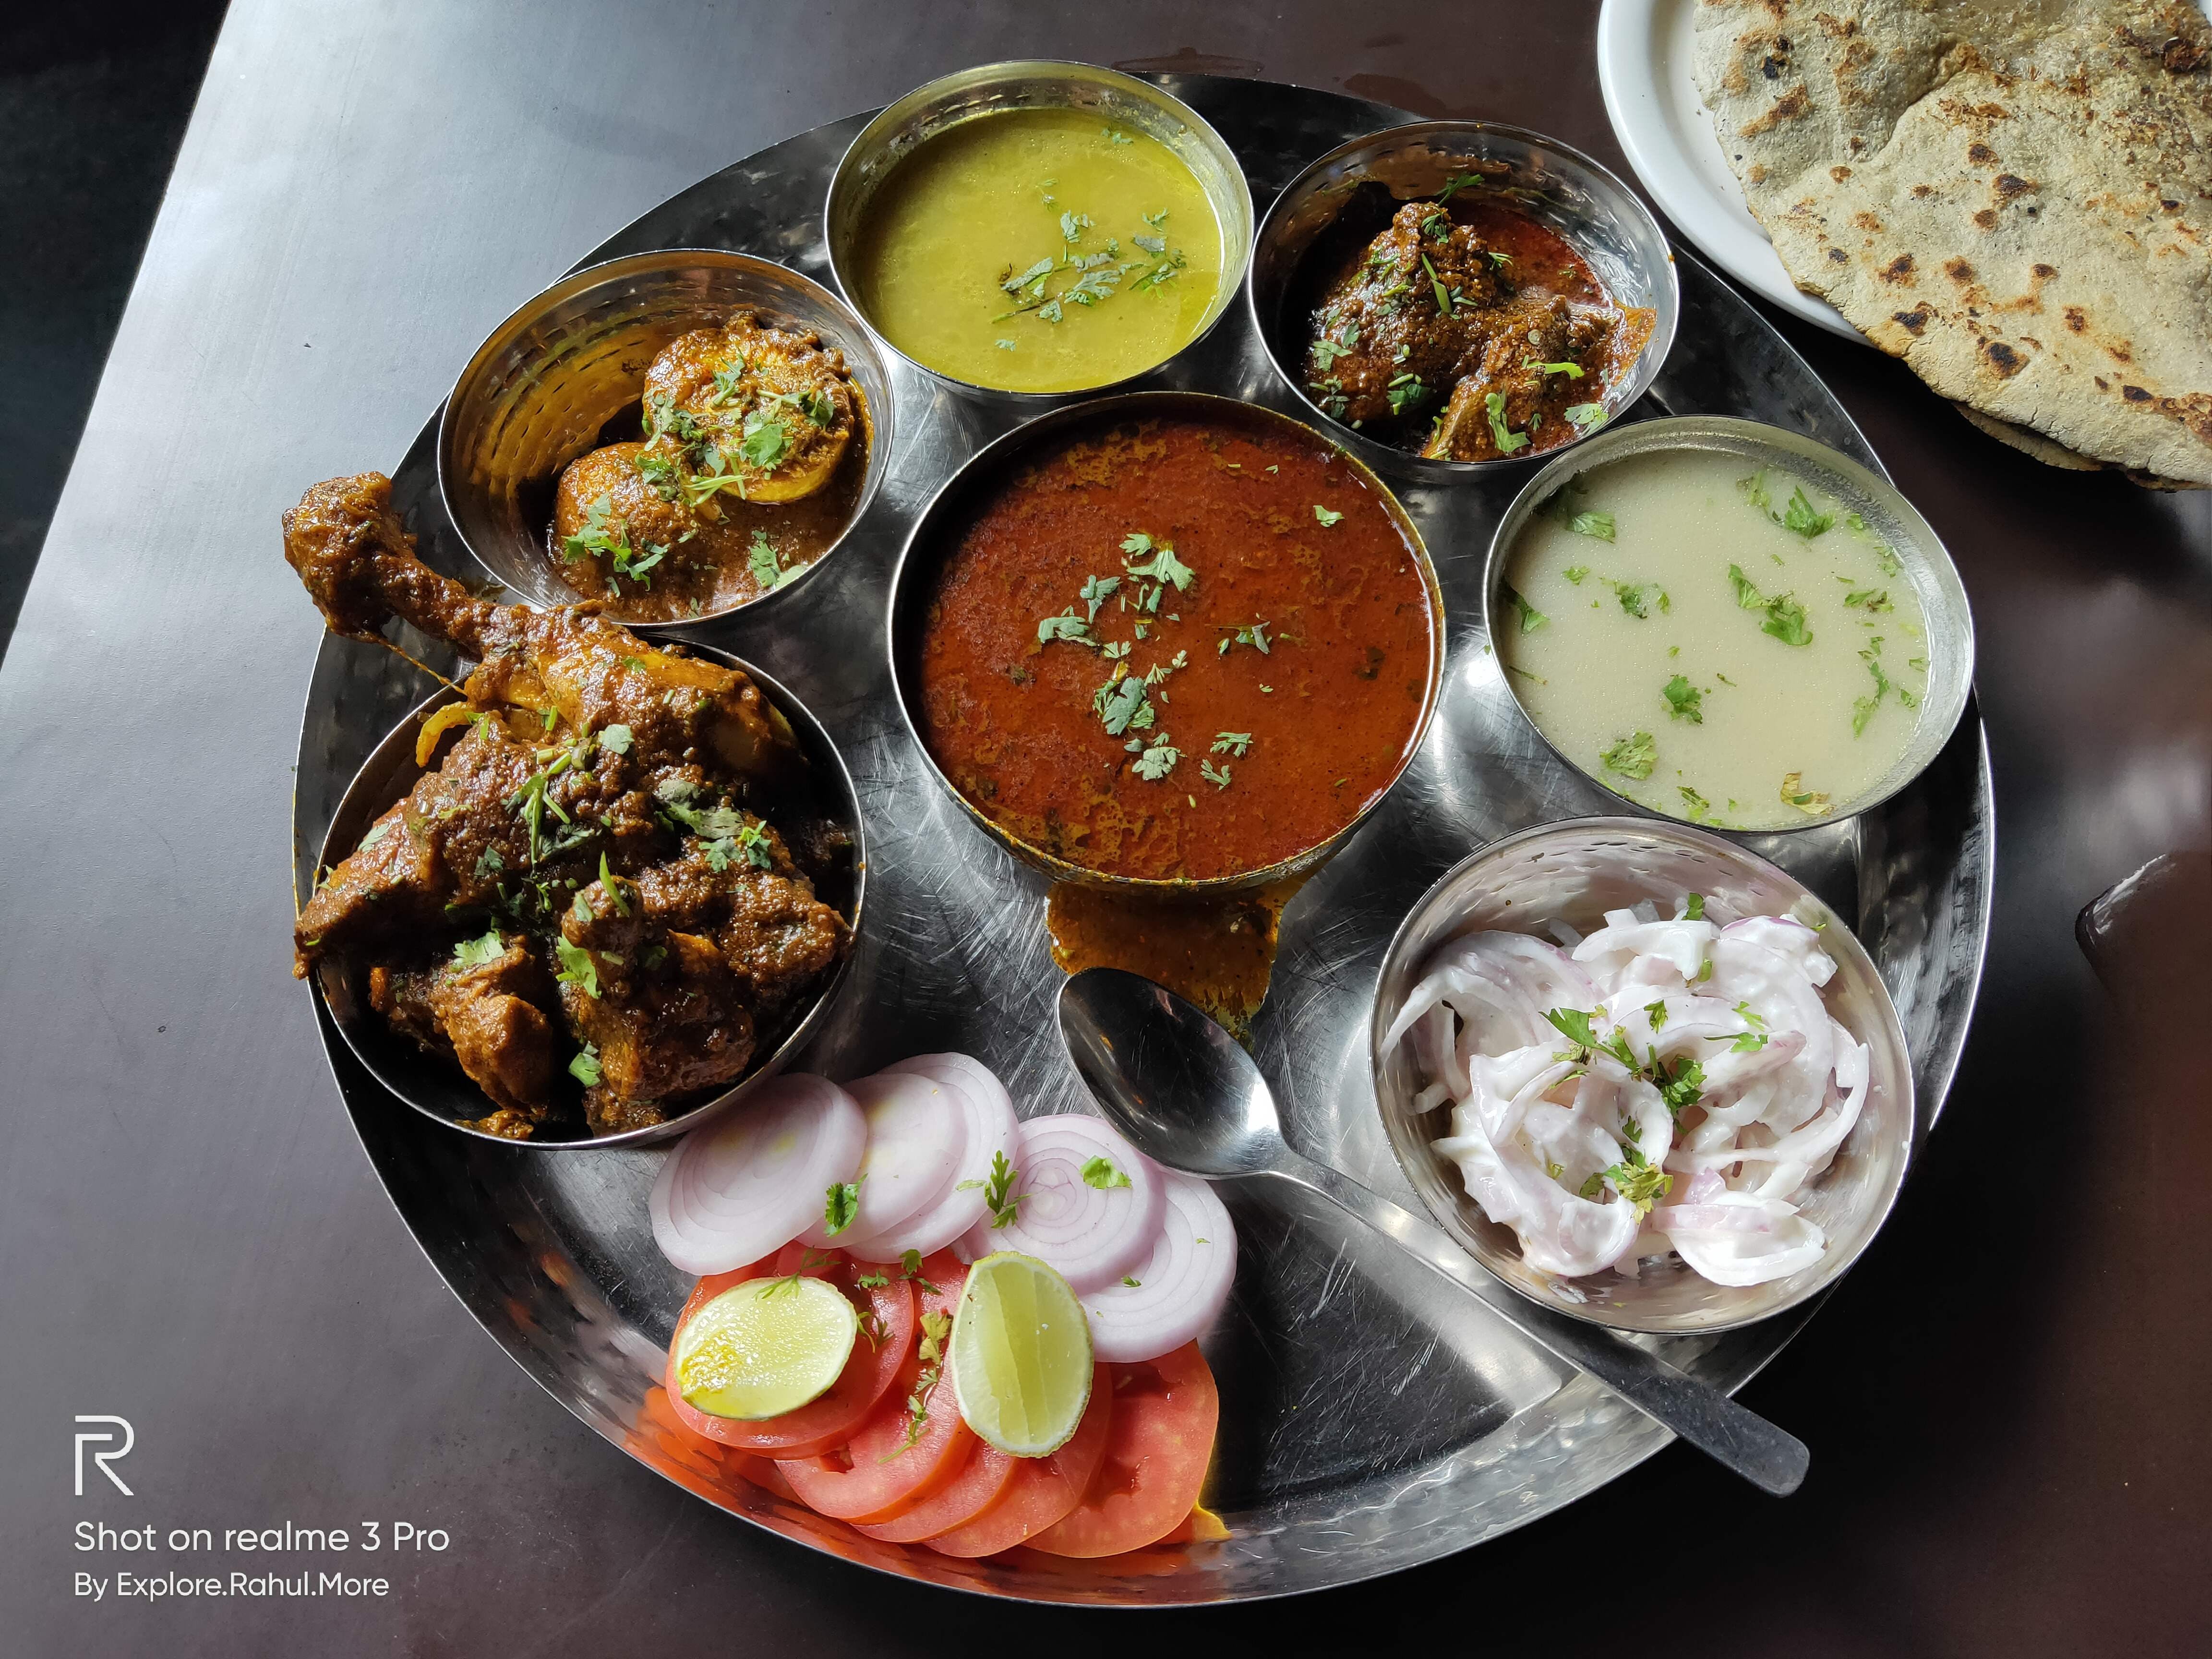 Dish,Food,Cuisine,Meal,Ingredient,Produce,Indian cuisine,Lunch,Curry,Punjabi cuisine